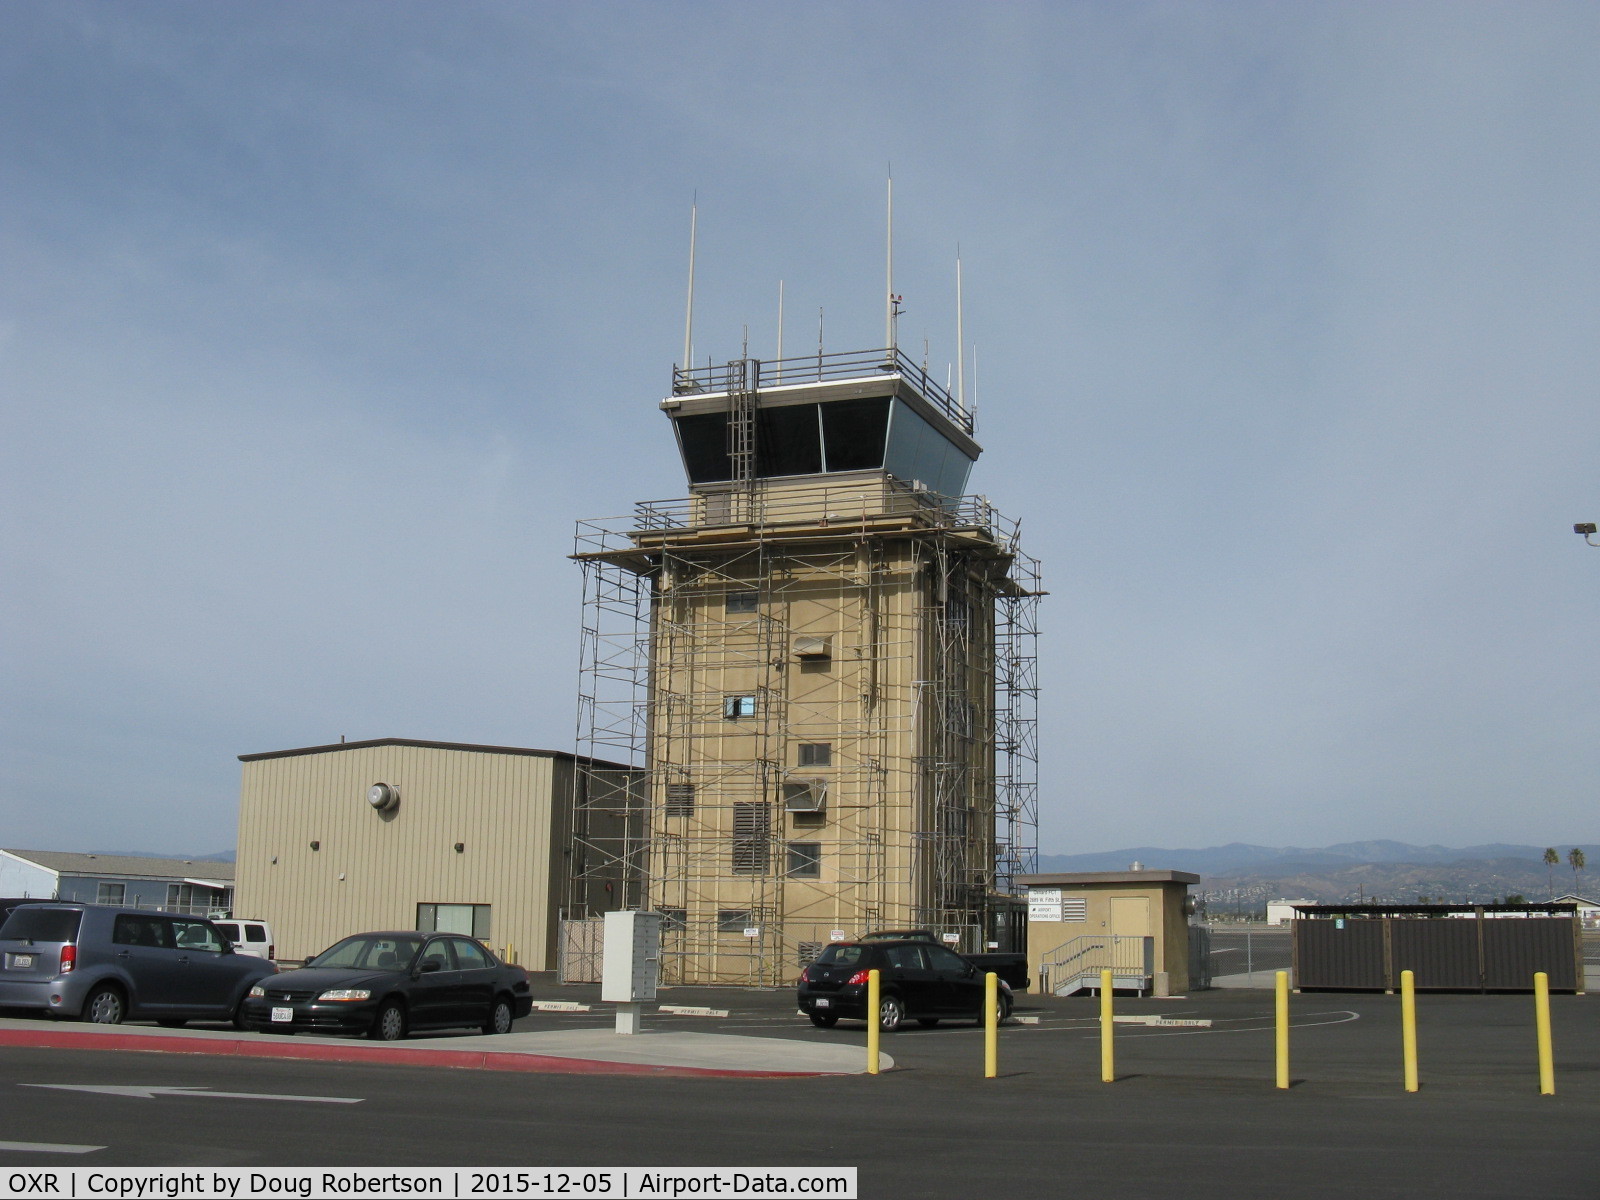 Oxnard Airport (OXR) - Oxnard OXR Air Traffic Control Tower undergoing some rehabilitation with scaffolding.